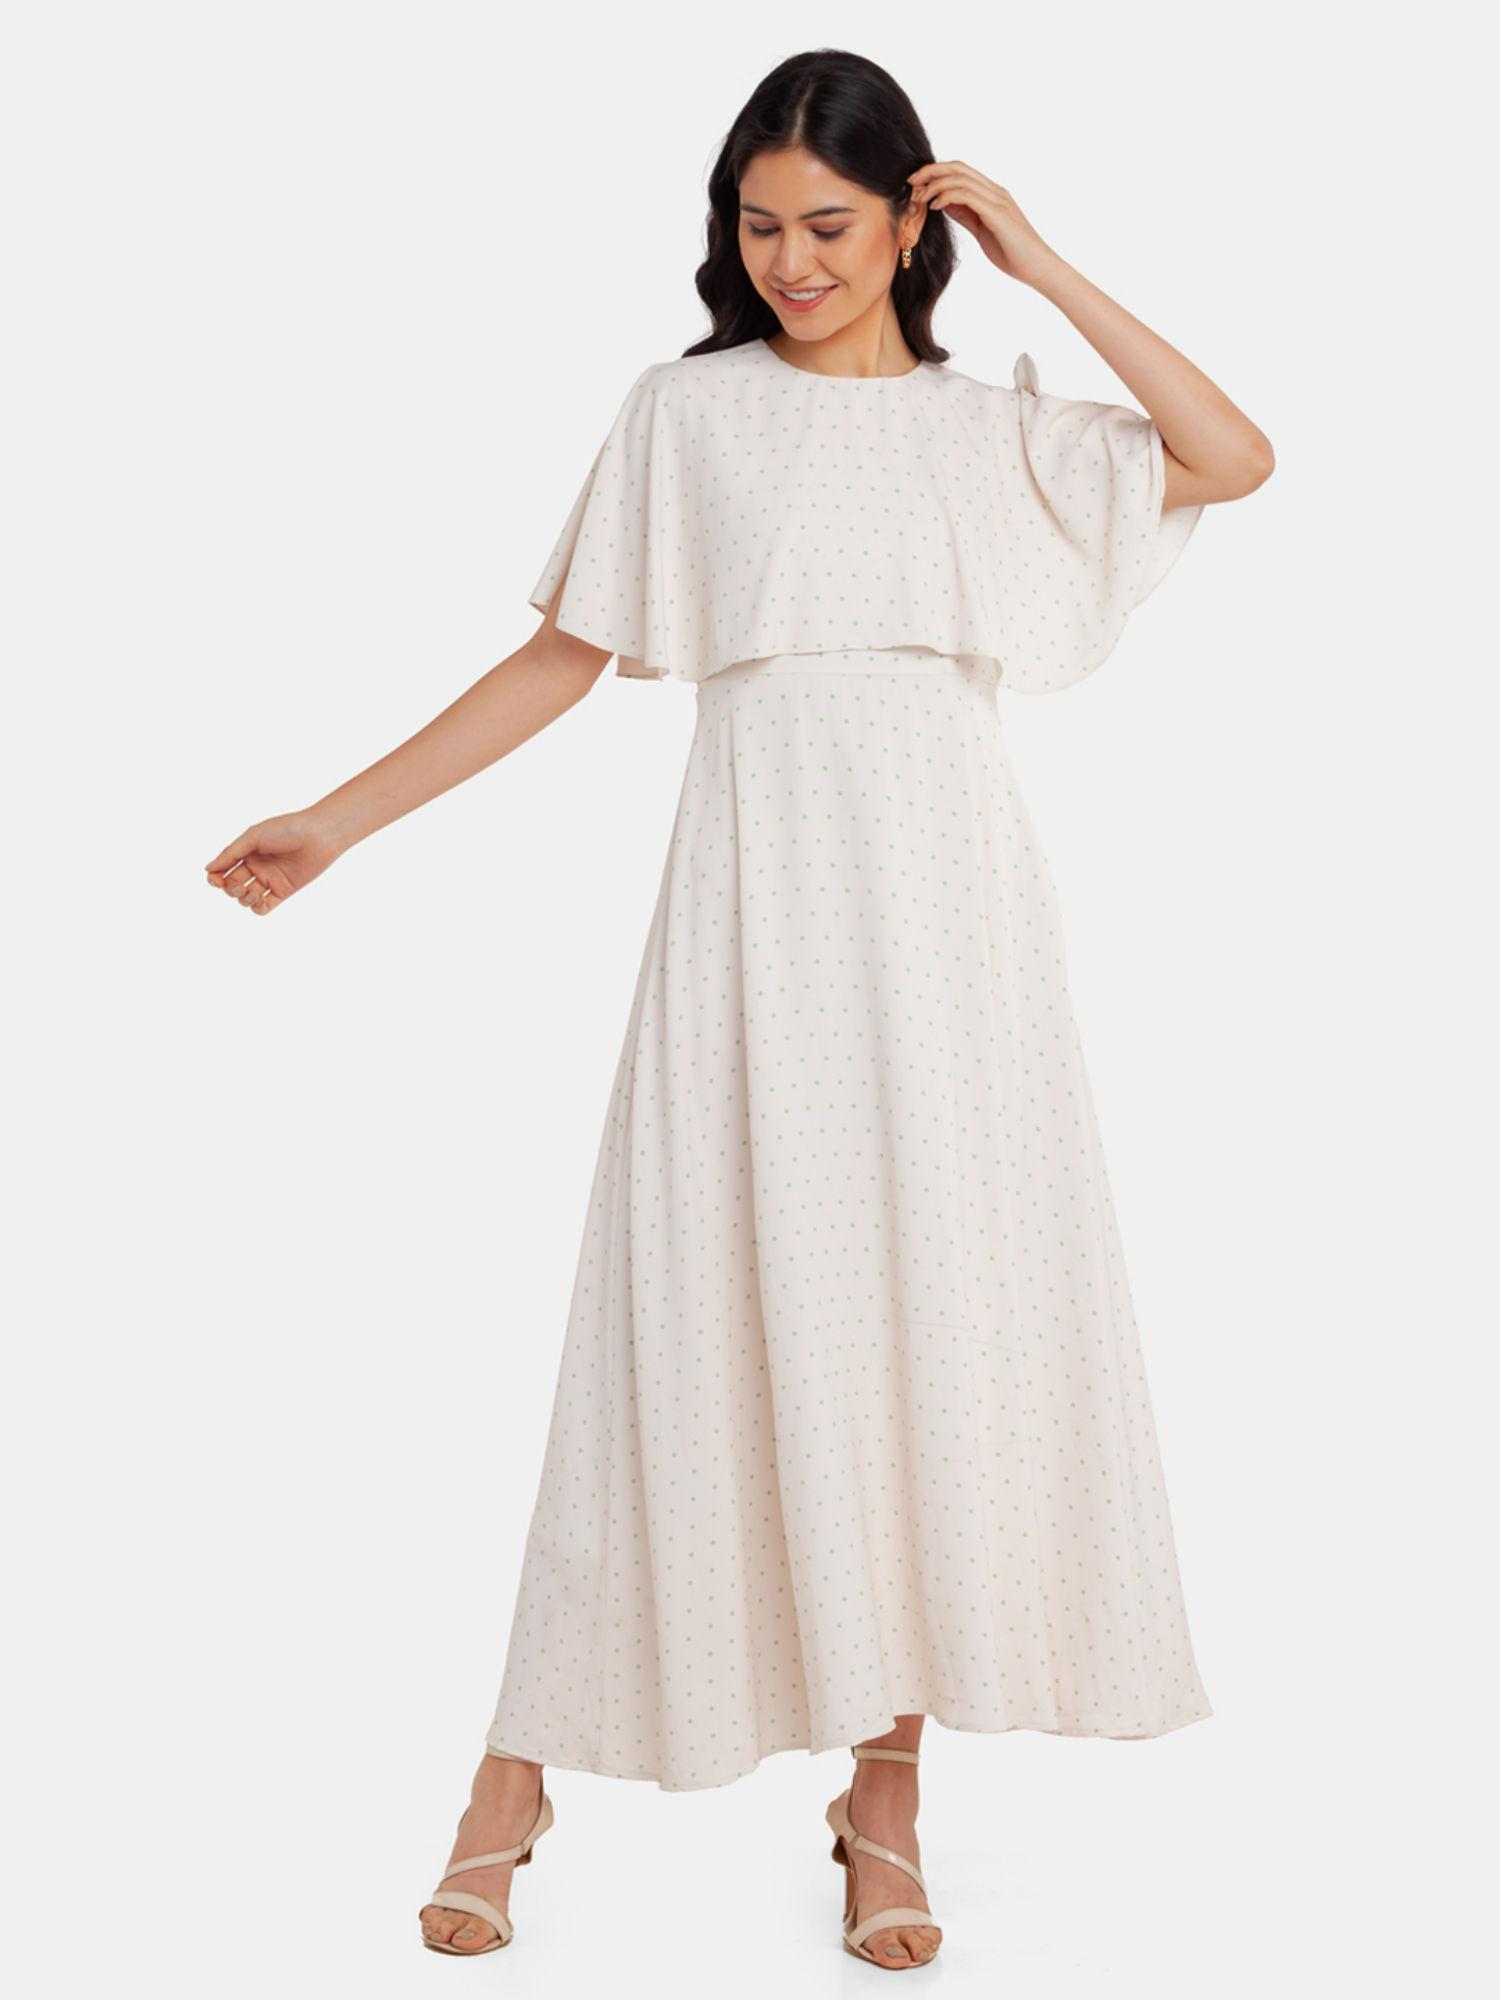 womens white polka dots maxi dress